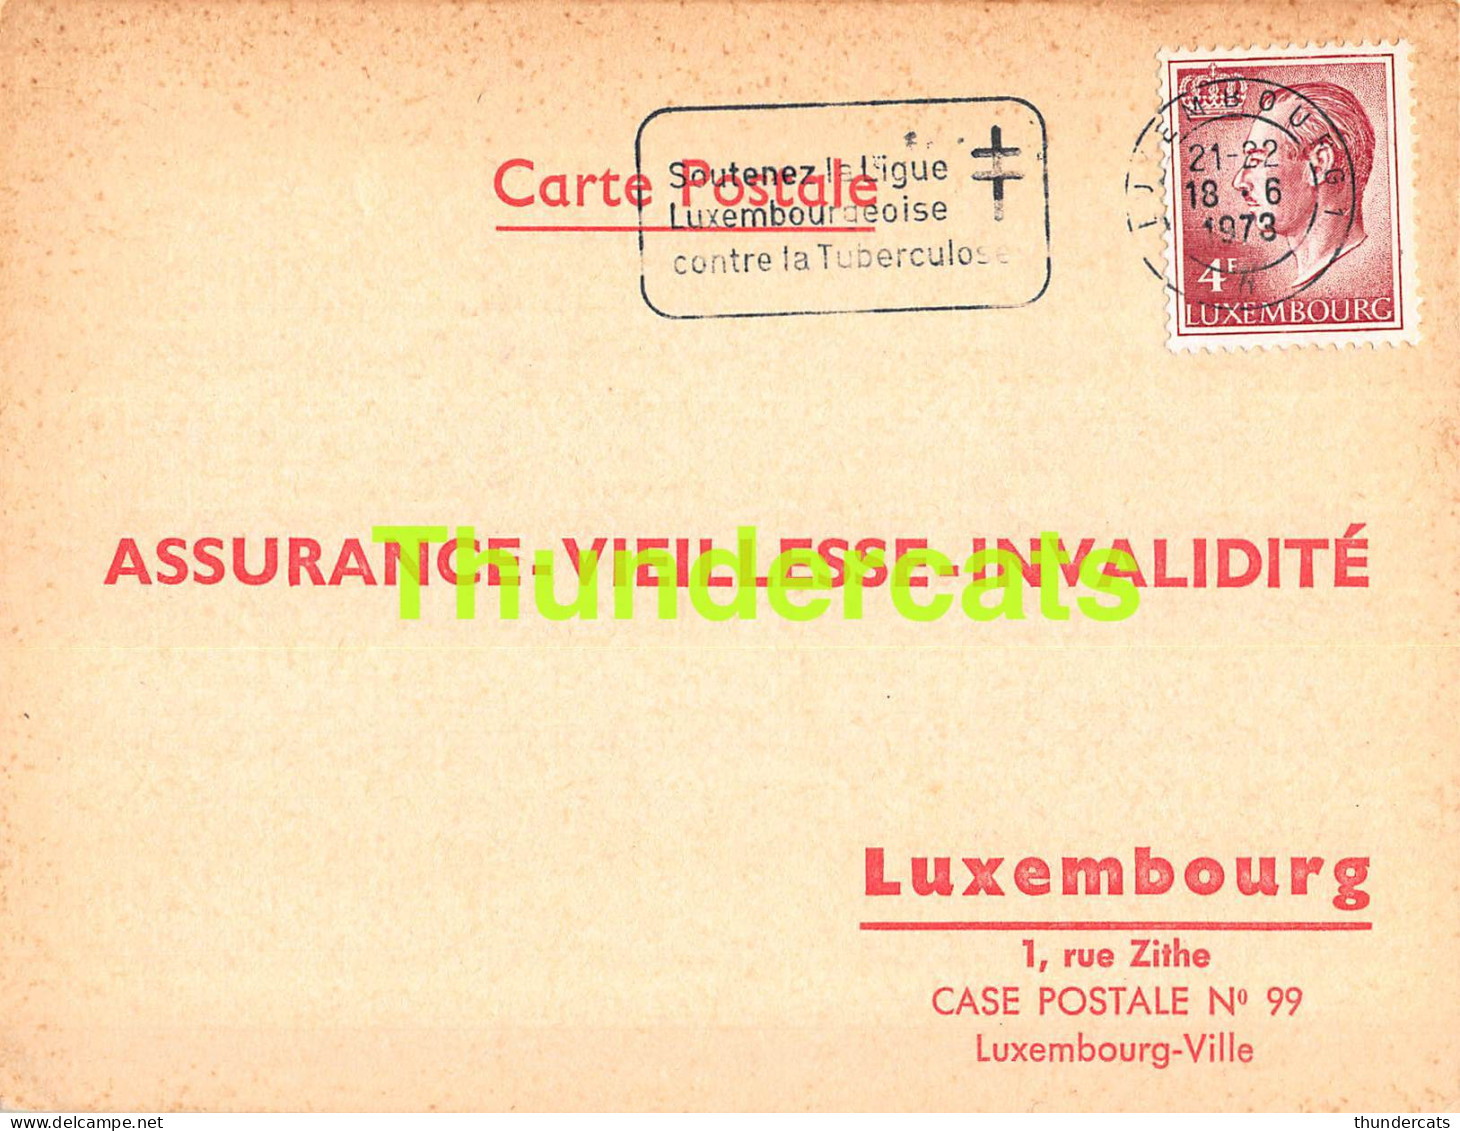 ASSURANCE VIEILLESSE INVALIDITE LUXEMBOURG 1973 KLOPP VAX BONNEVOIE  - Cartas & Documentos